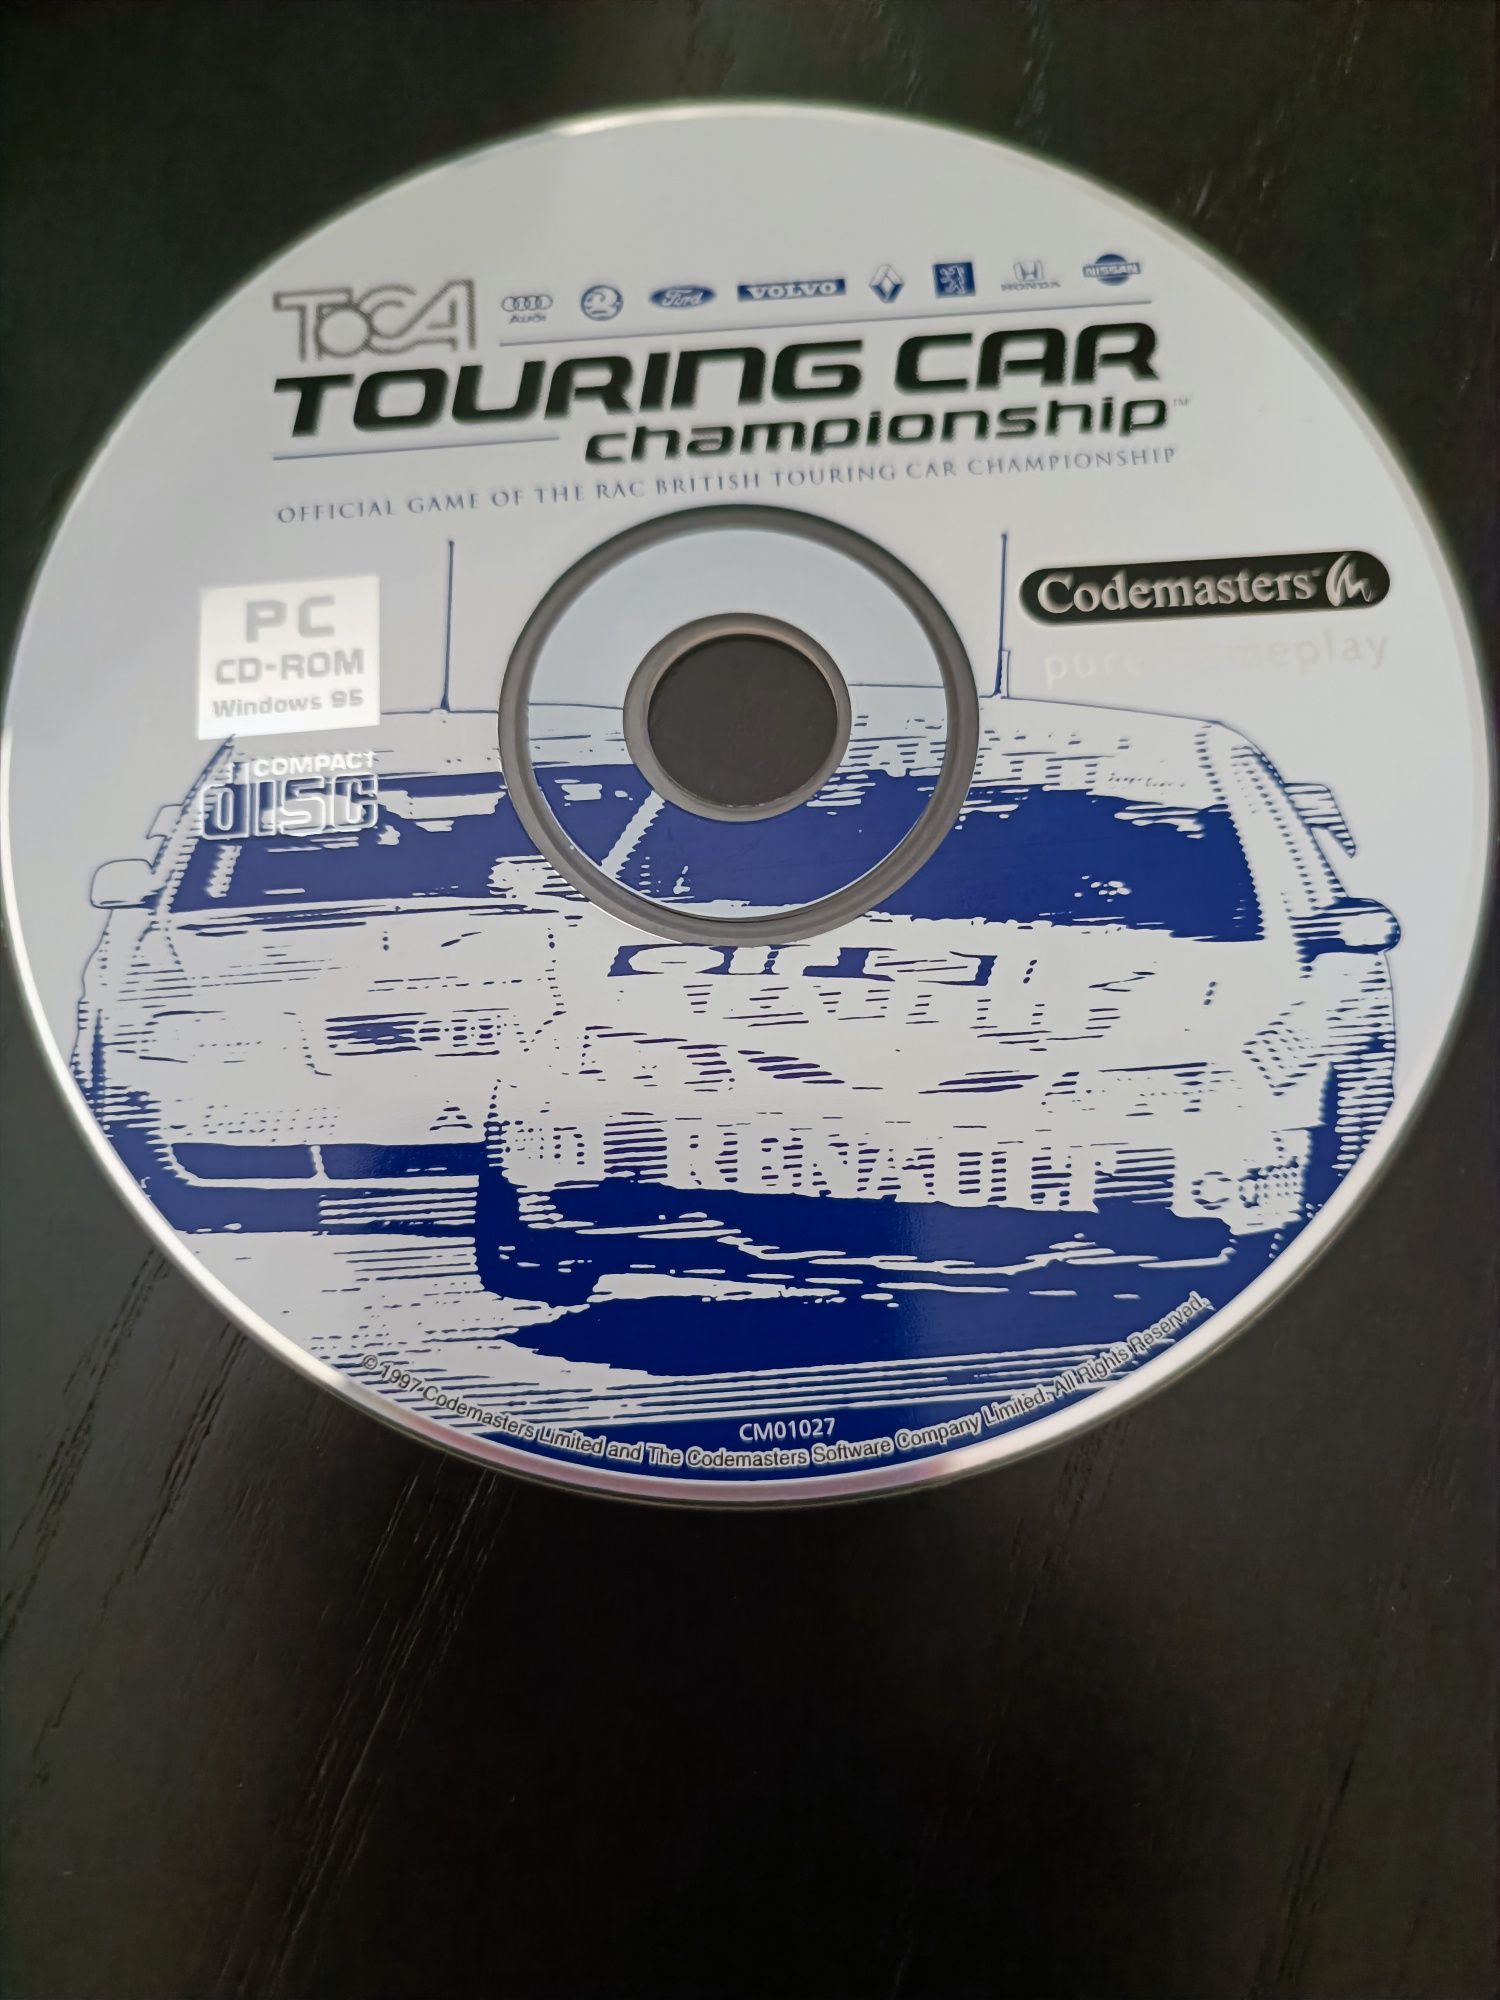 Toca touring car championship - Playstation